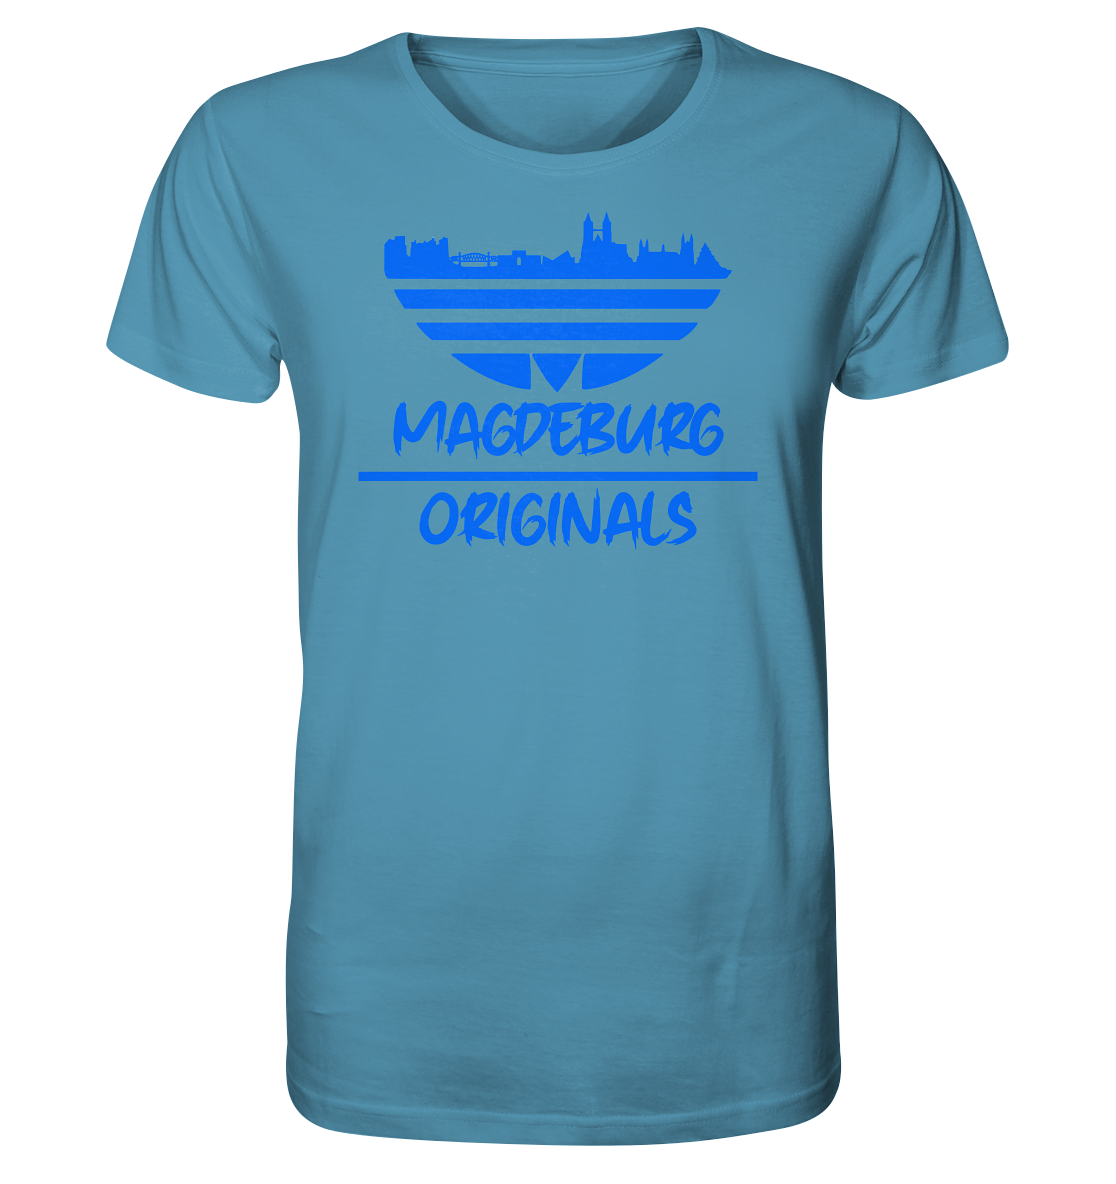 Magdeburg Originals - Organic Shirt